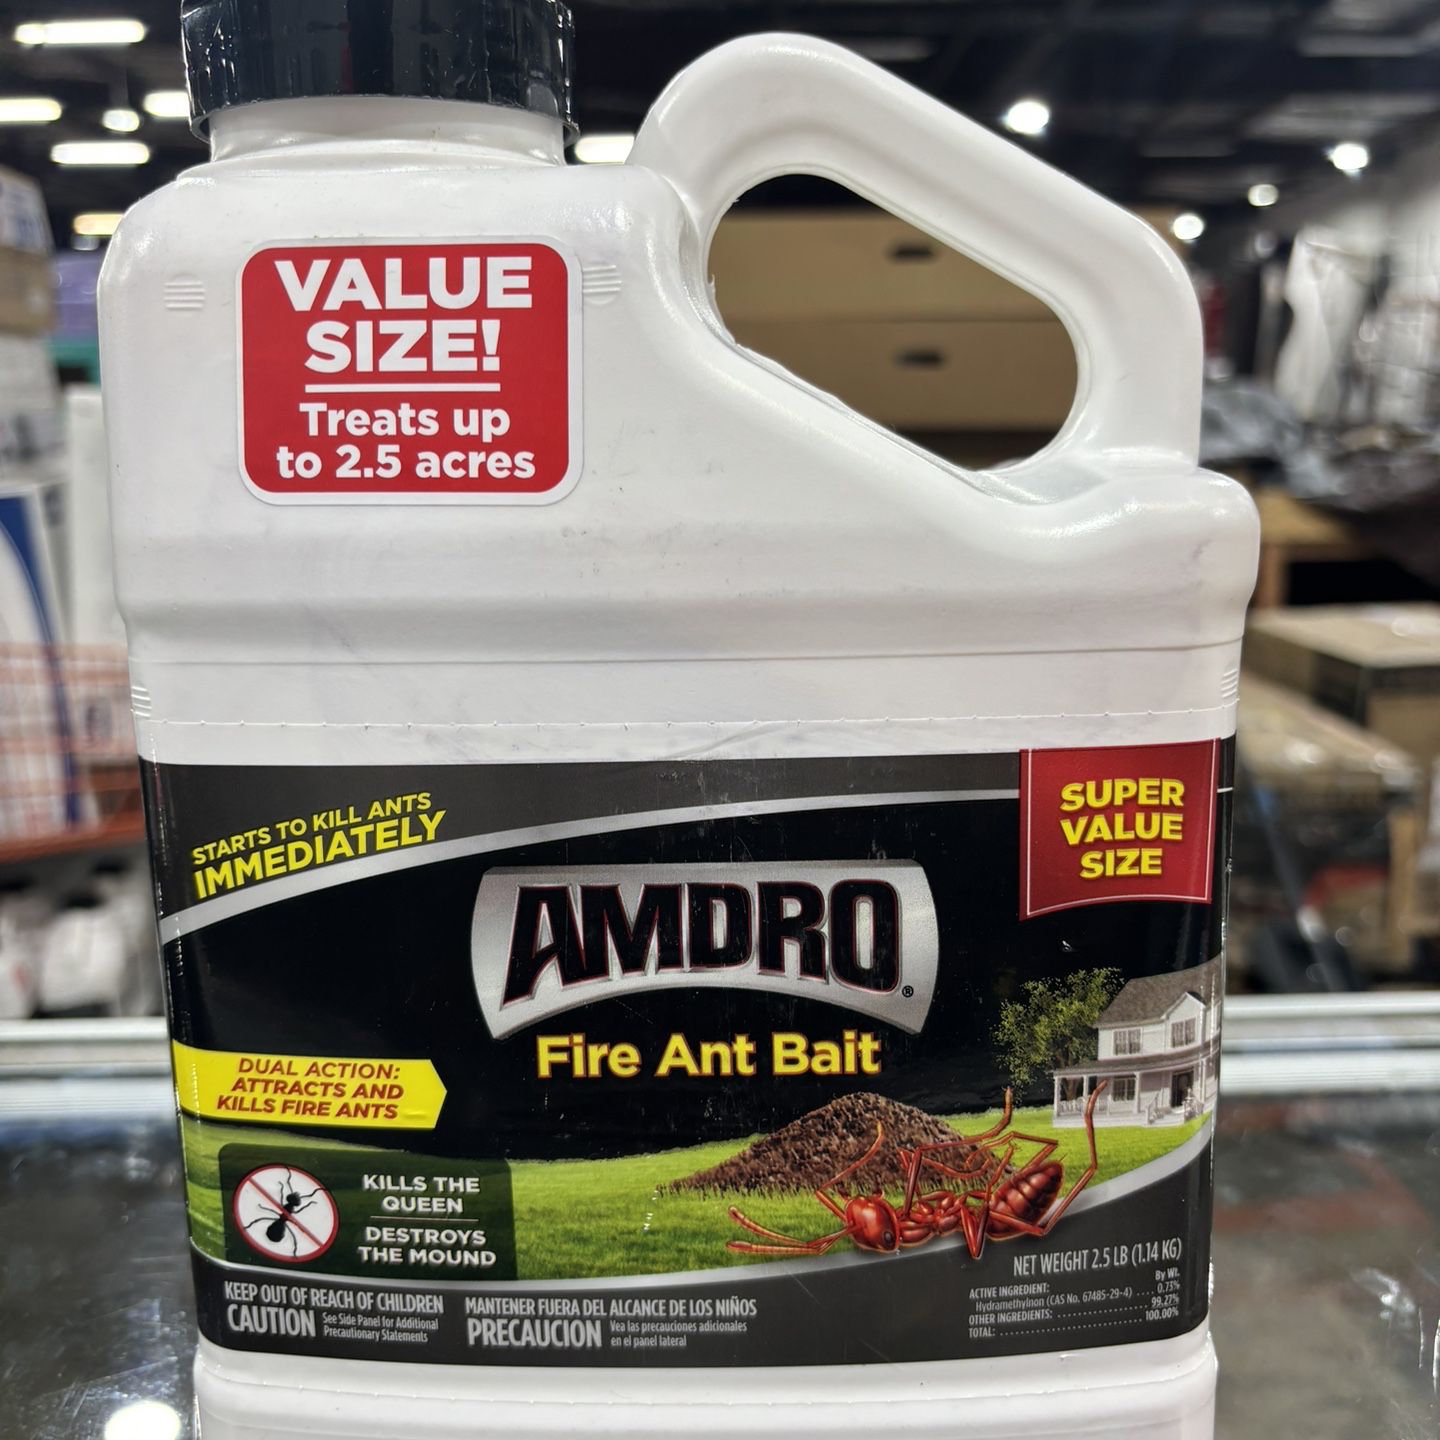 Ambro Fire Ant Bait